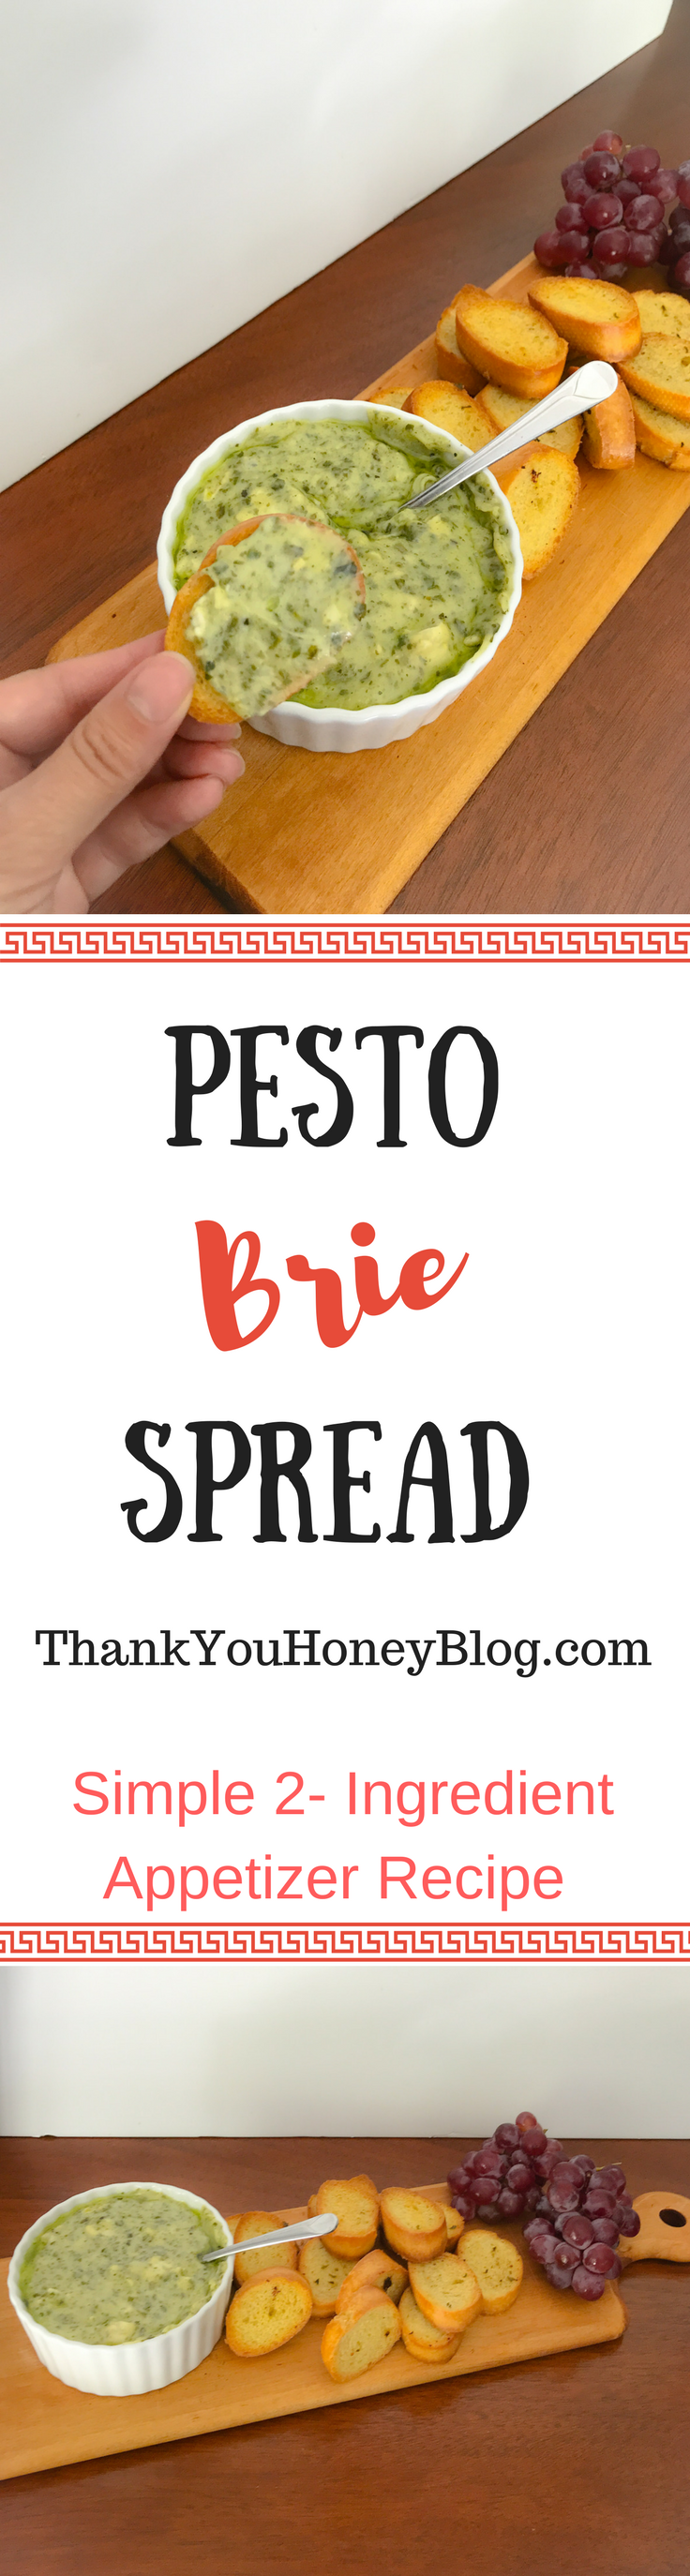 Pesto Brie Spread #ShareWineandBites {ad}